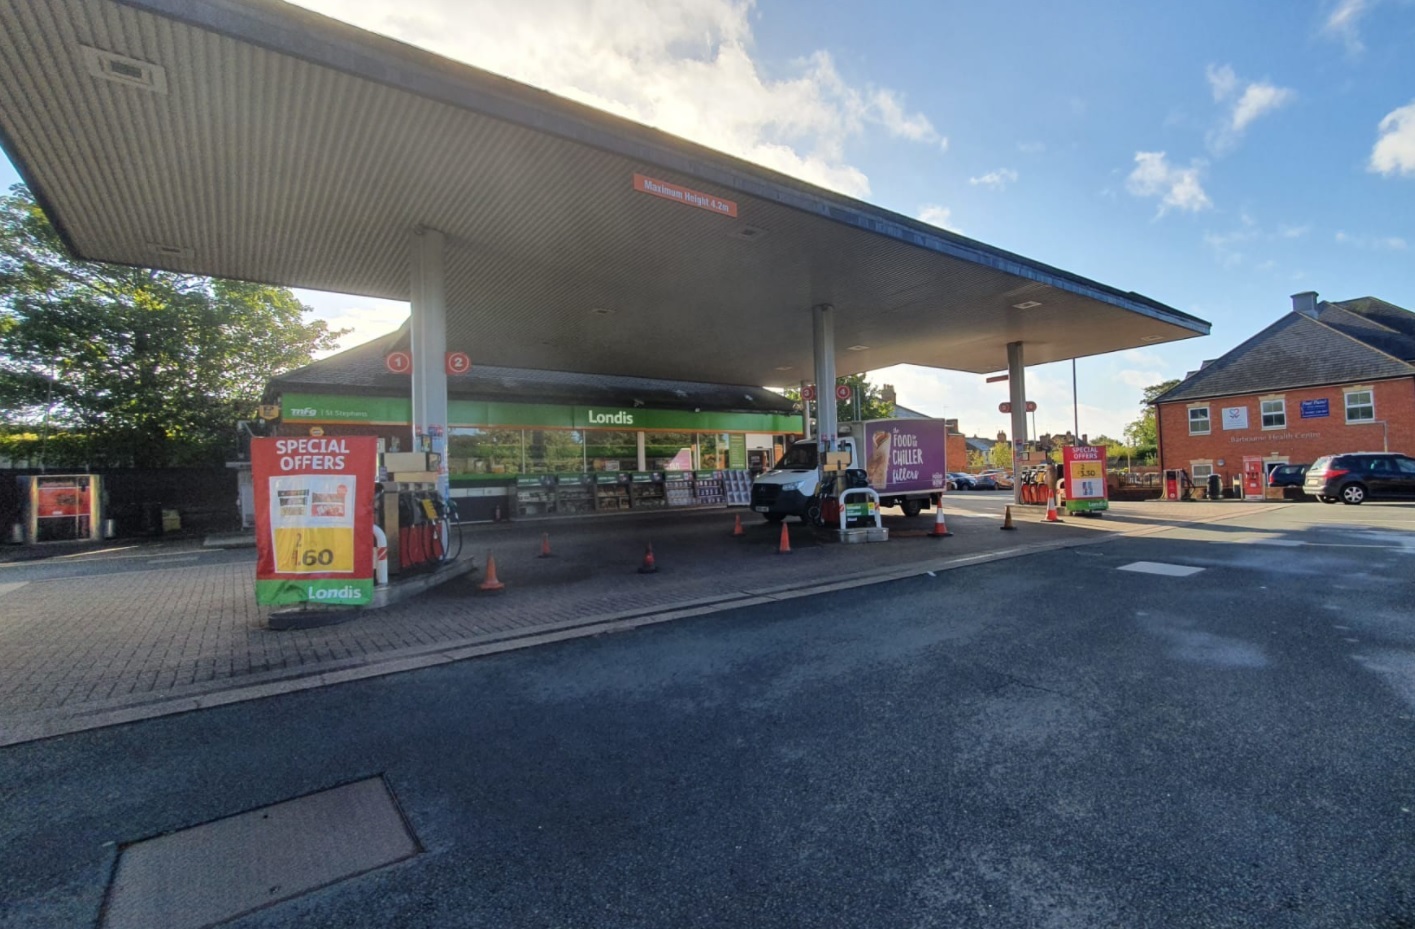 CLOSED: Texaco in Droitwich Road had no fuel